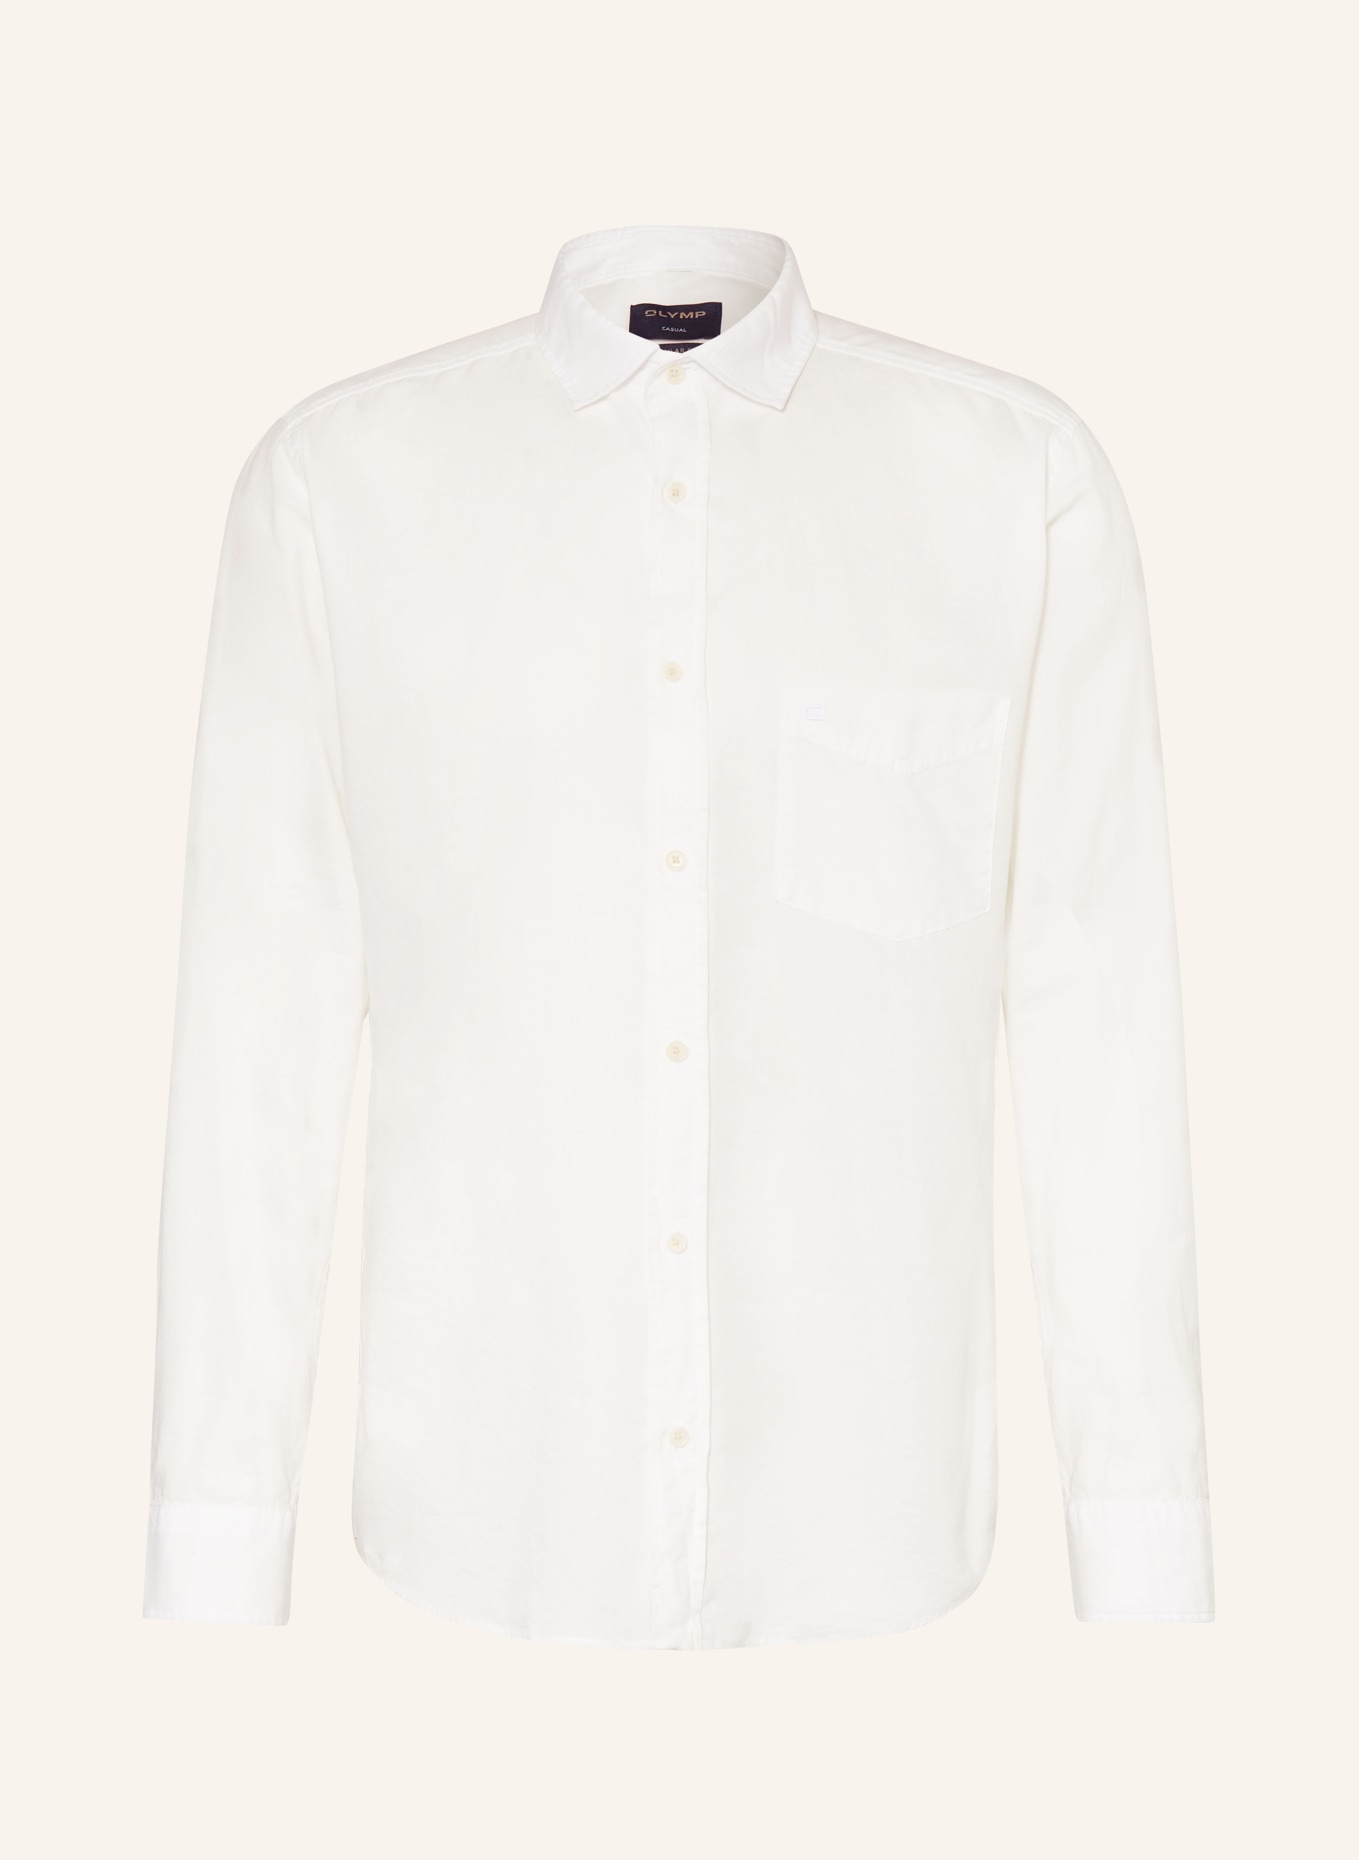 OLYMP Hemd regular fit, Farbe: ECRU (Bild 1)